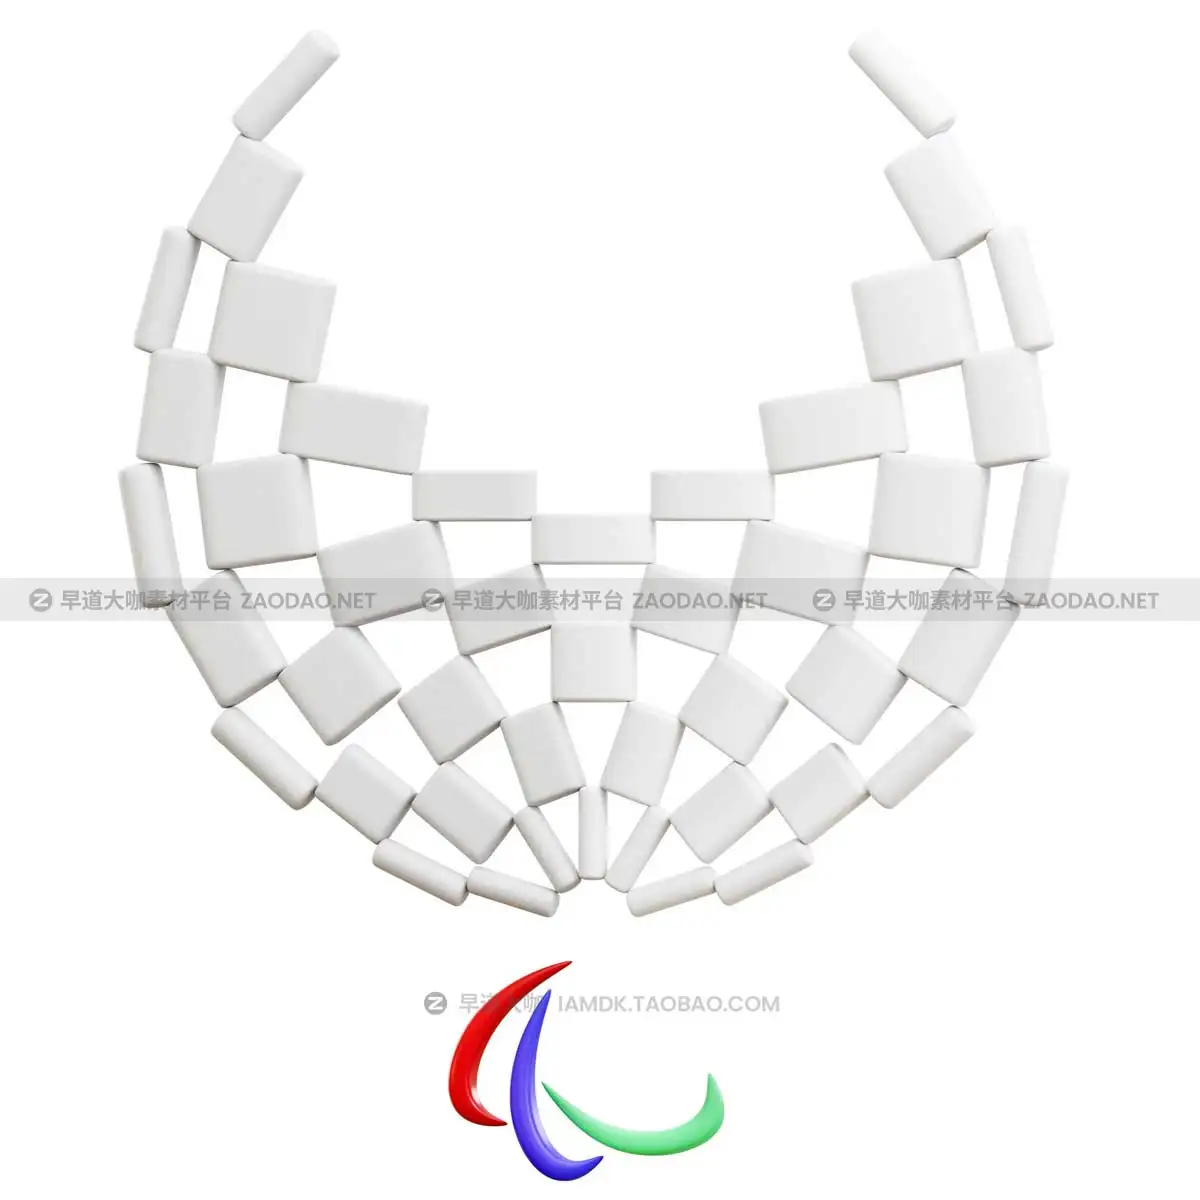 20个时尚奥林匹克体育运动健身3D插画插图图标Icons设计素材 Sports And Olympics 3D Illustration Pack插图12